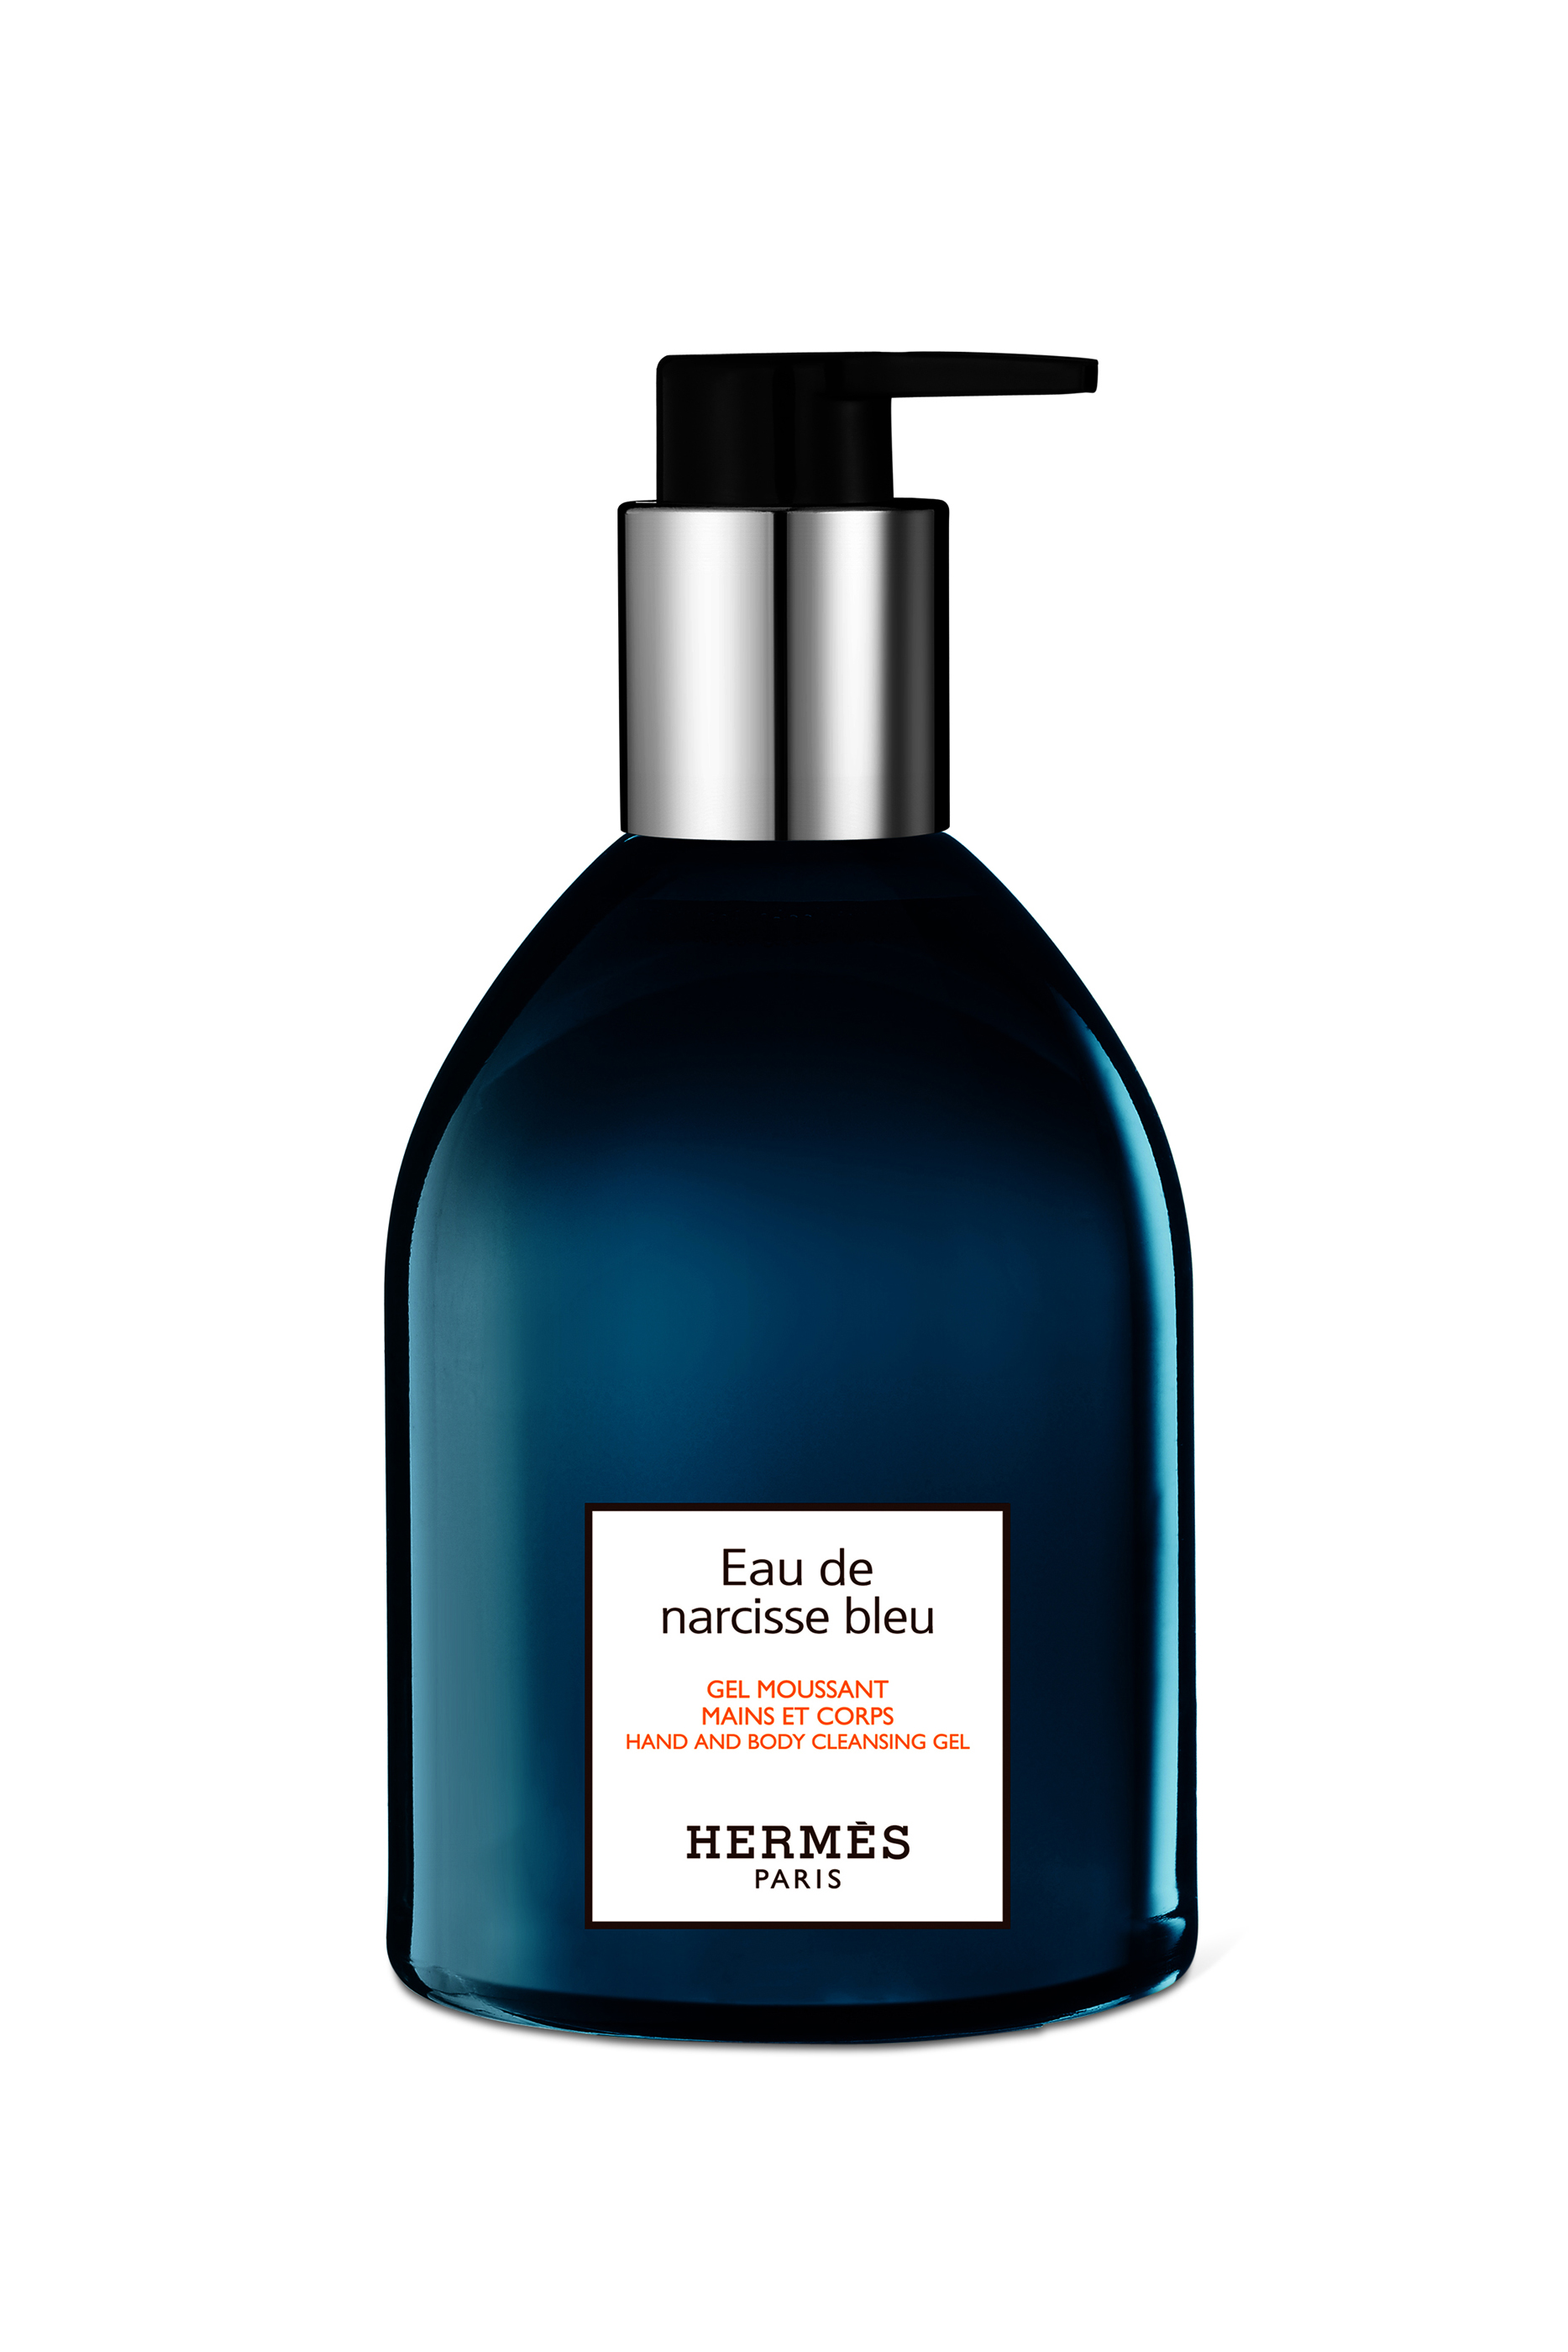 Buy Hermes Eau de narcisse bleu, Hand and body cleansing gel for Unisex